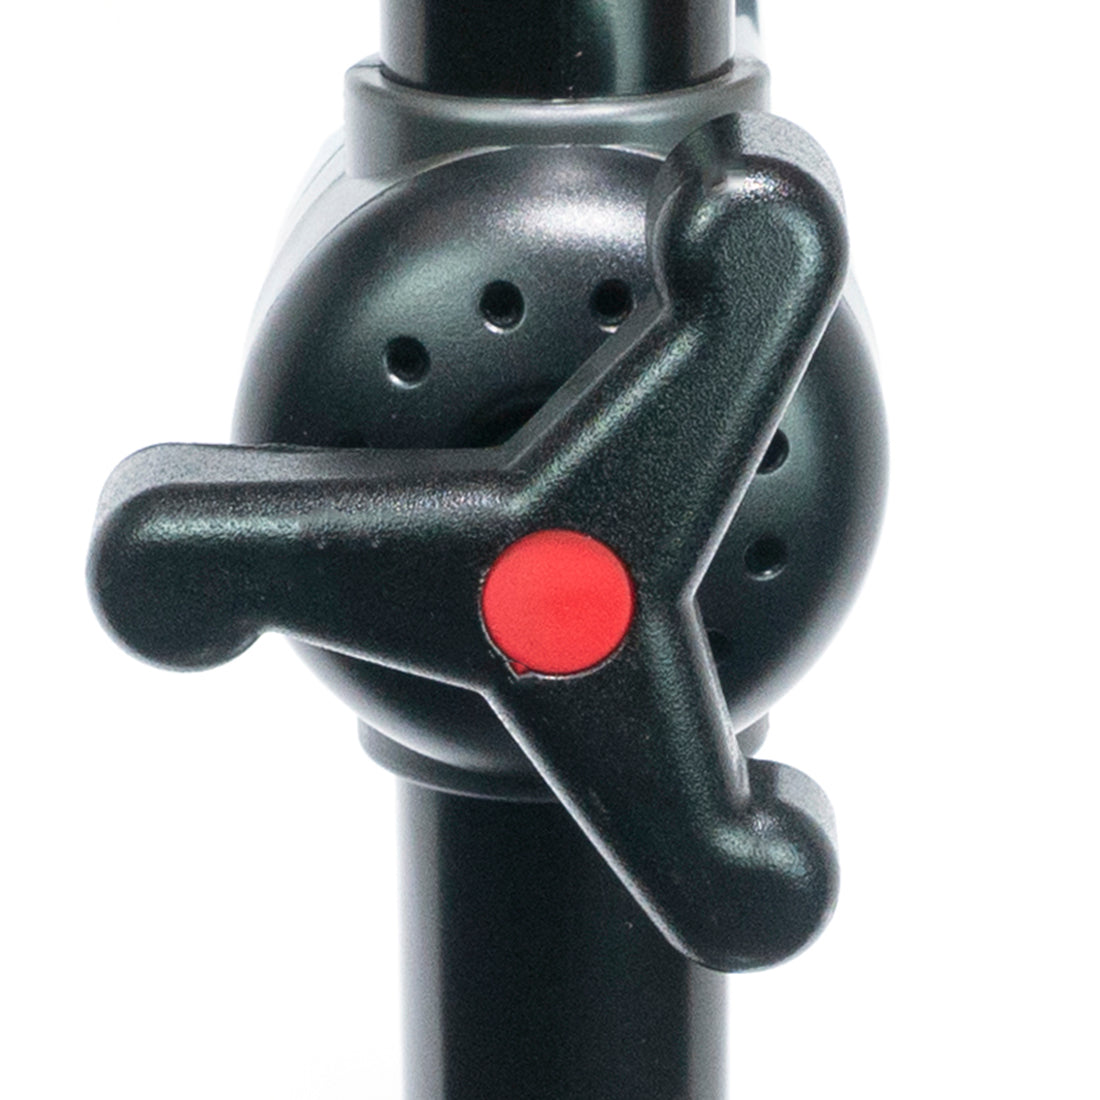 close up of a bike repair stand clamp jaw adjusting knob.